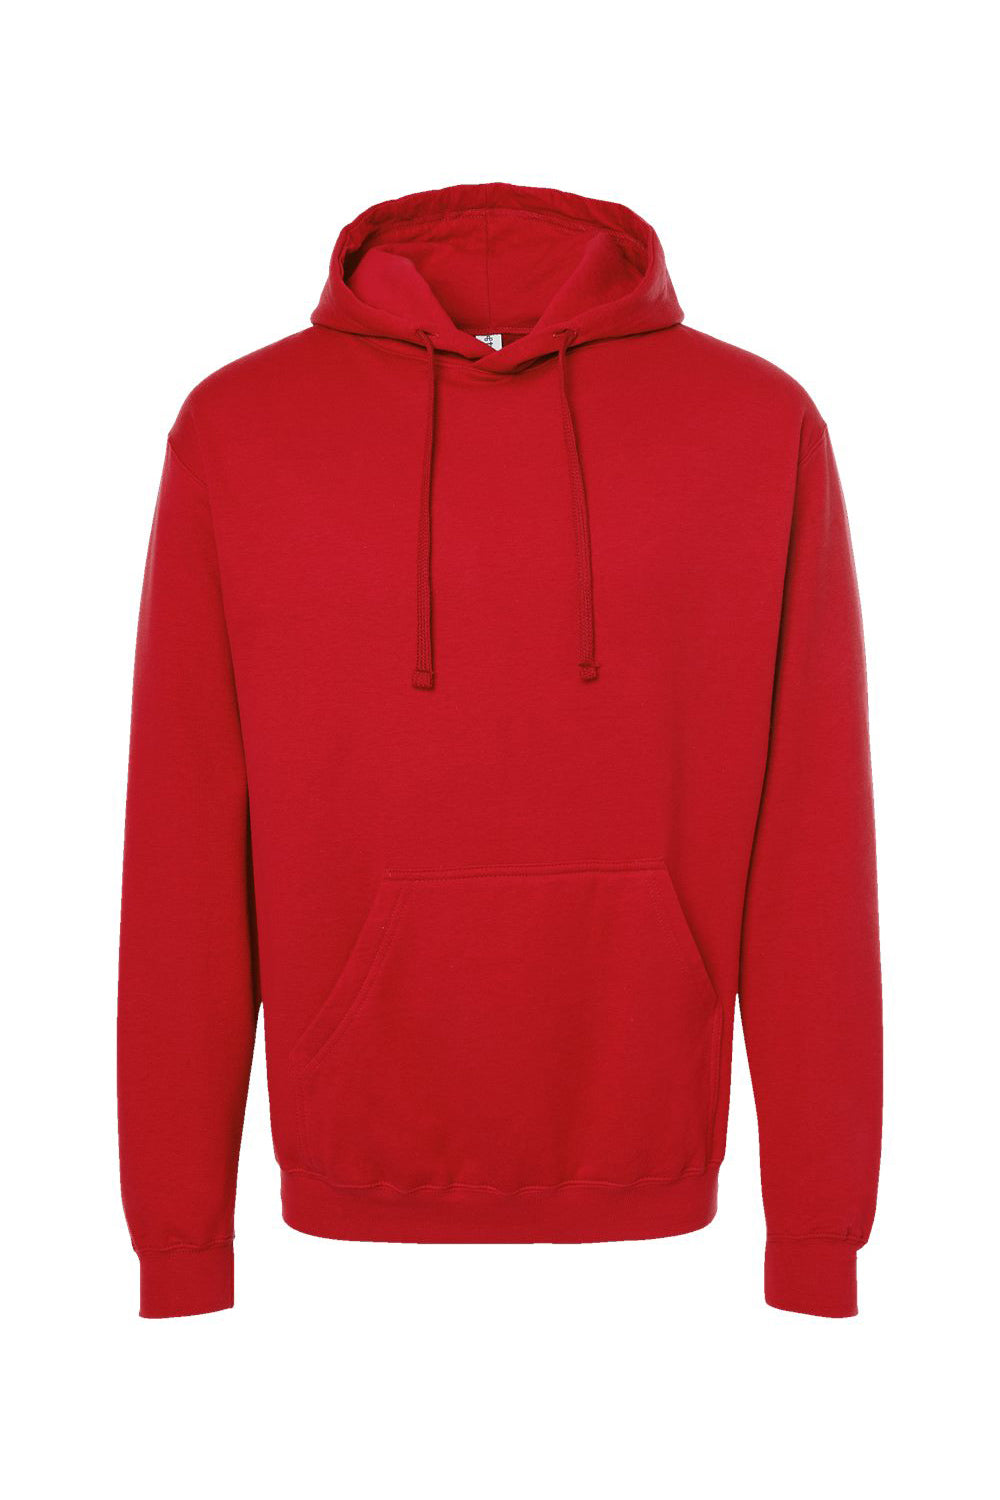 Tultex 320 Mens Fleece Hooded Sweatshirt Hoodie Red Flat Front